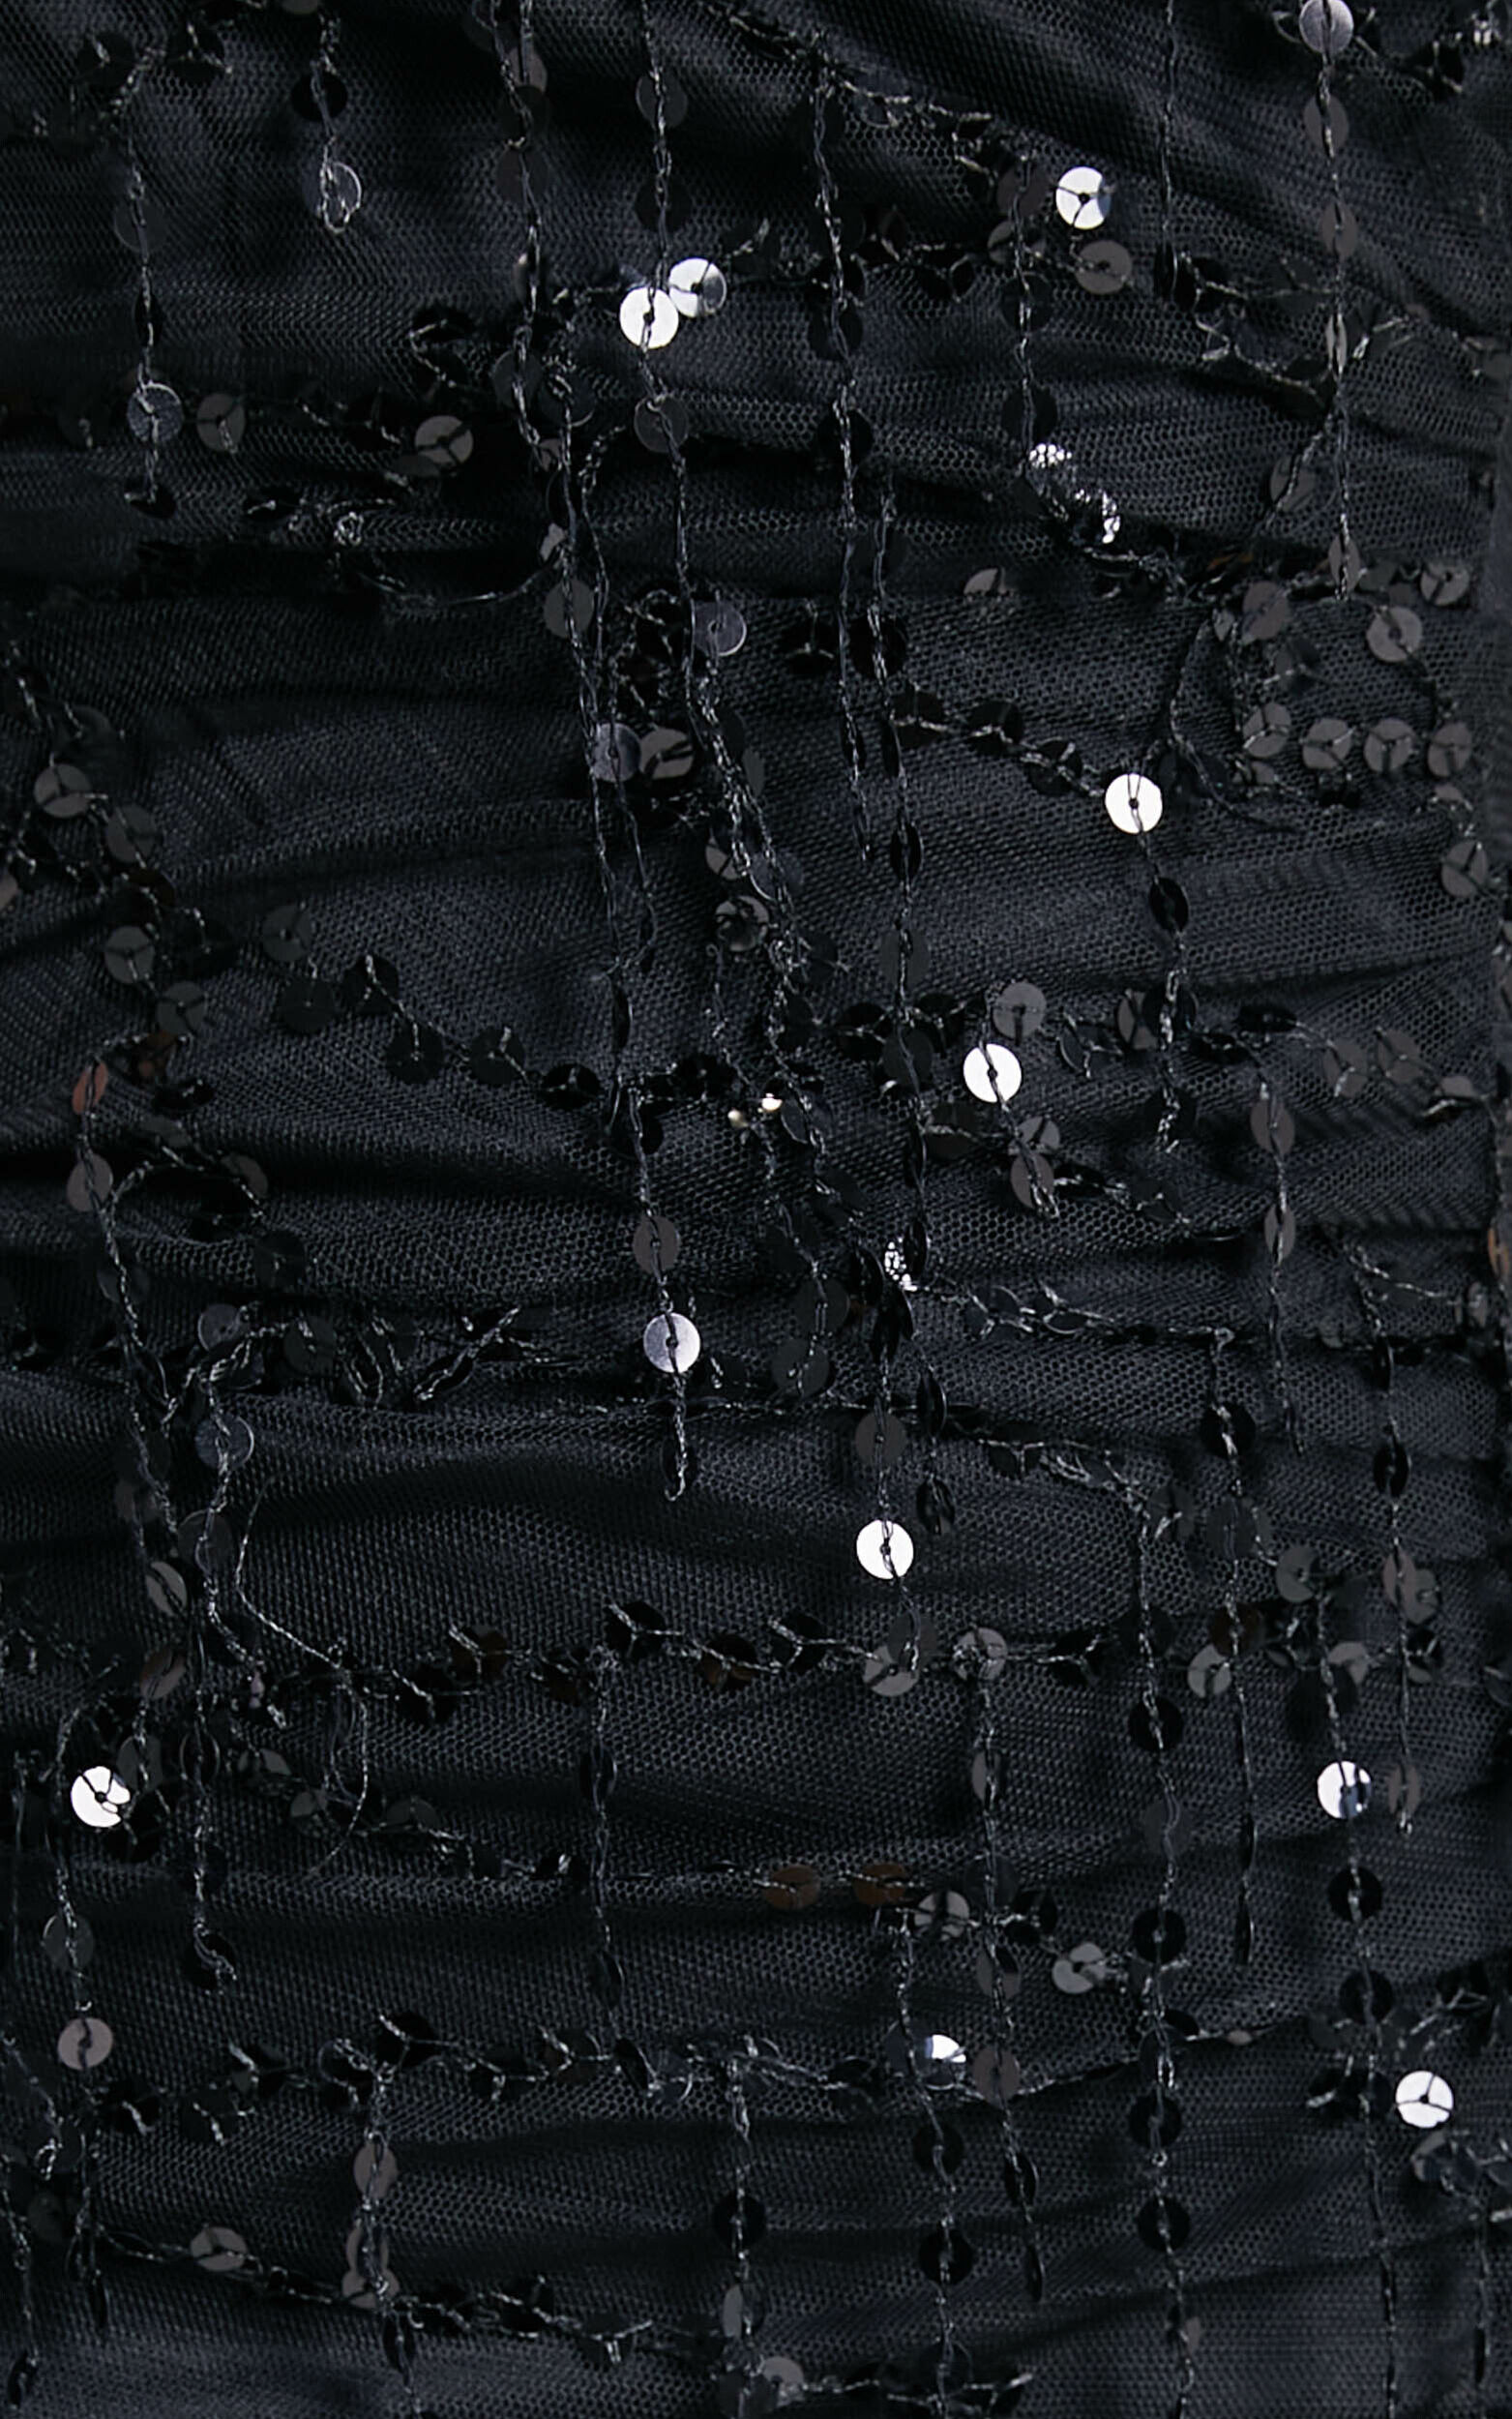 Maieth Maxi Dress - Drape Sequin Halter Cross Back Dress in Black ...